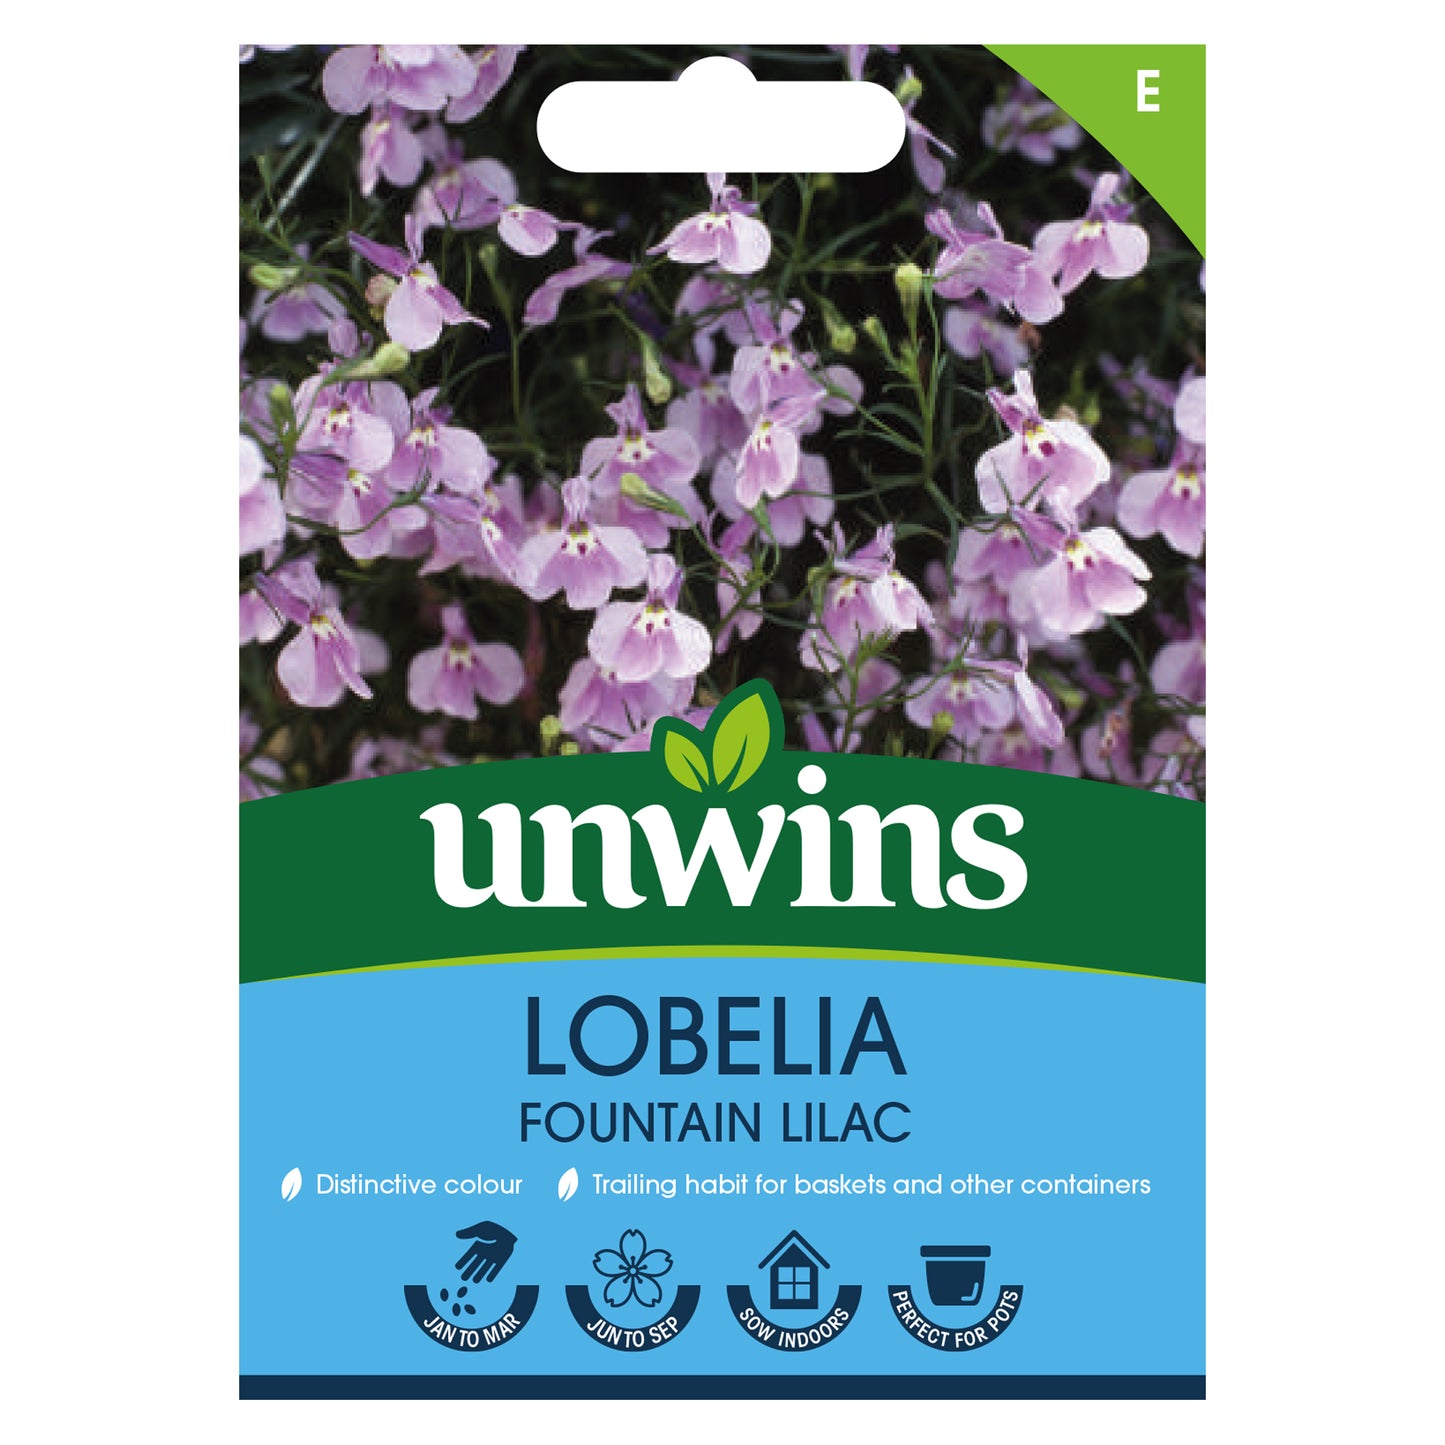 Unwins Lobelia Fountain Lilac Seeds front of pack